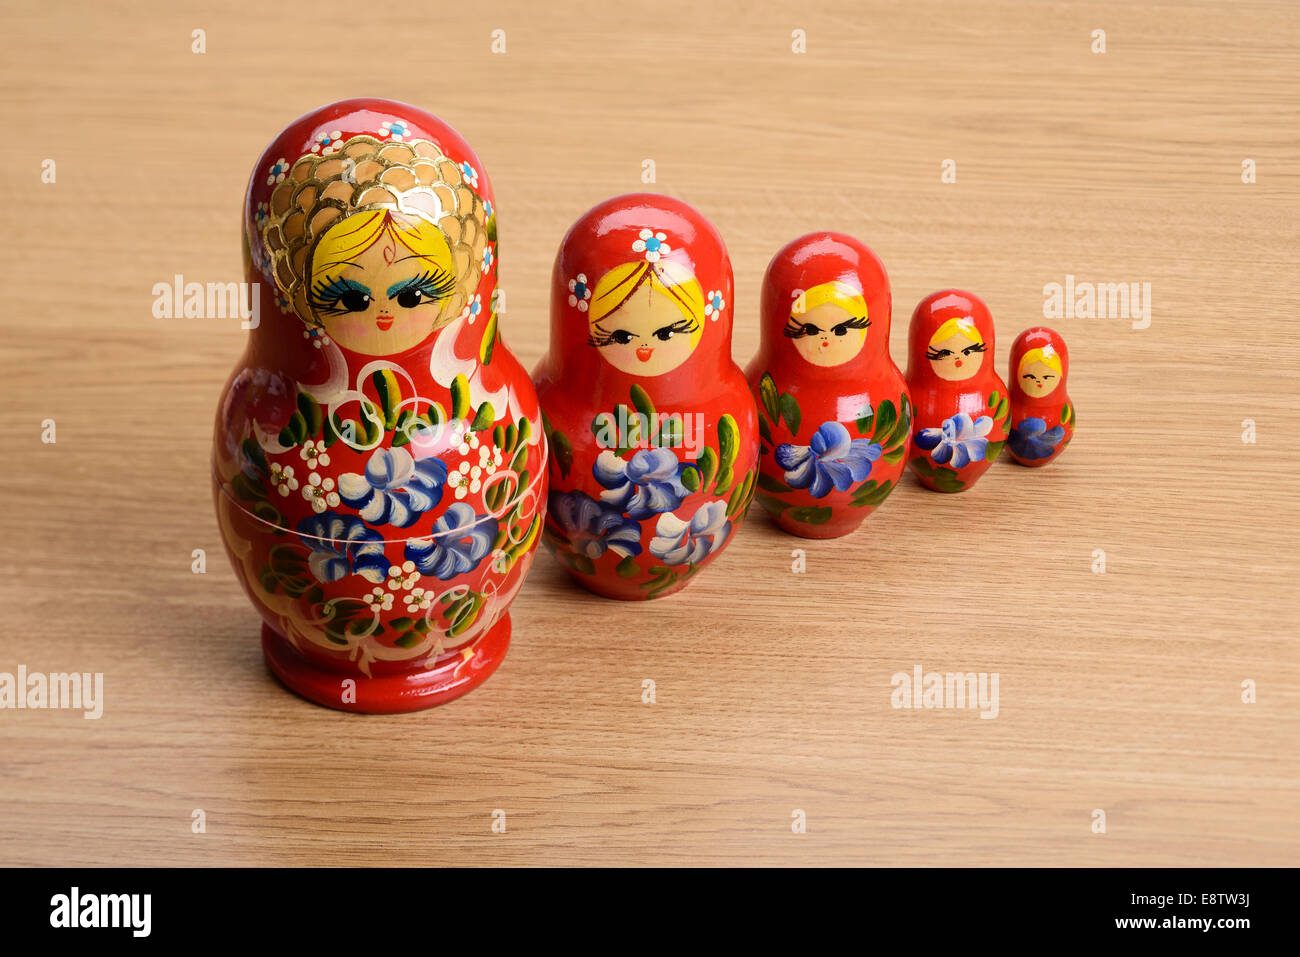 La línea roja de cinco muñecas rusas. Foto de stock